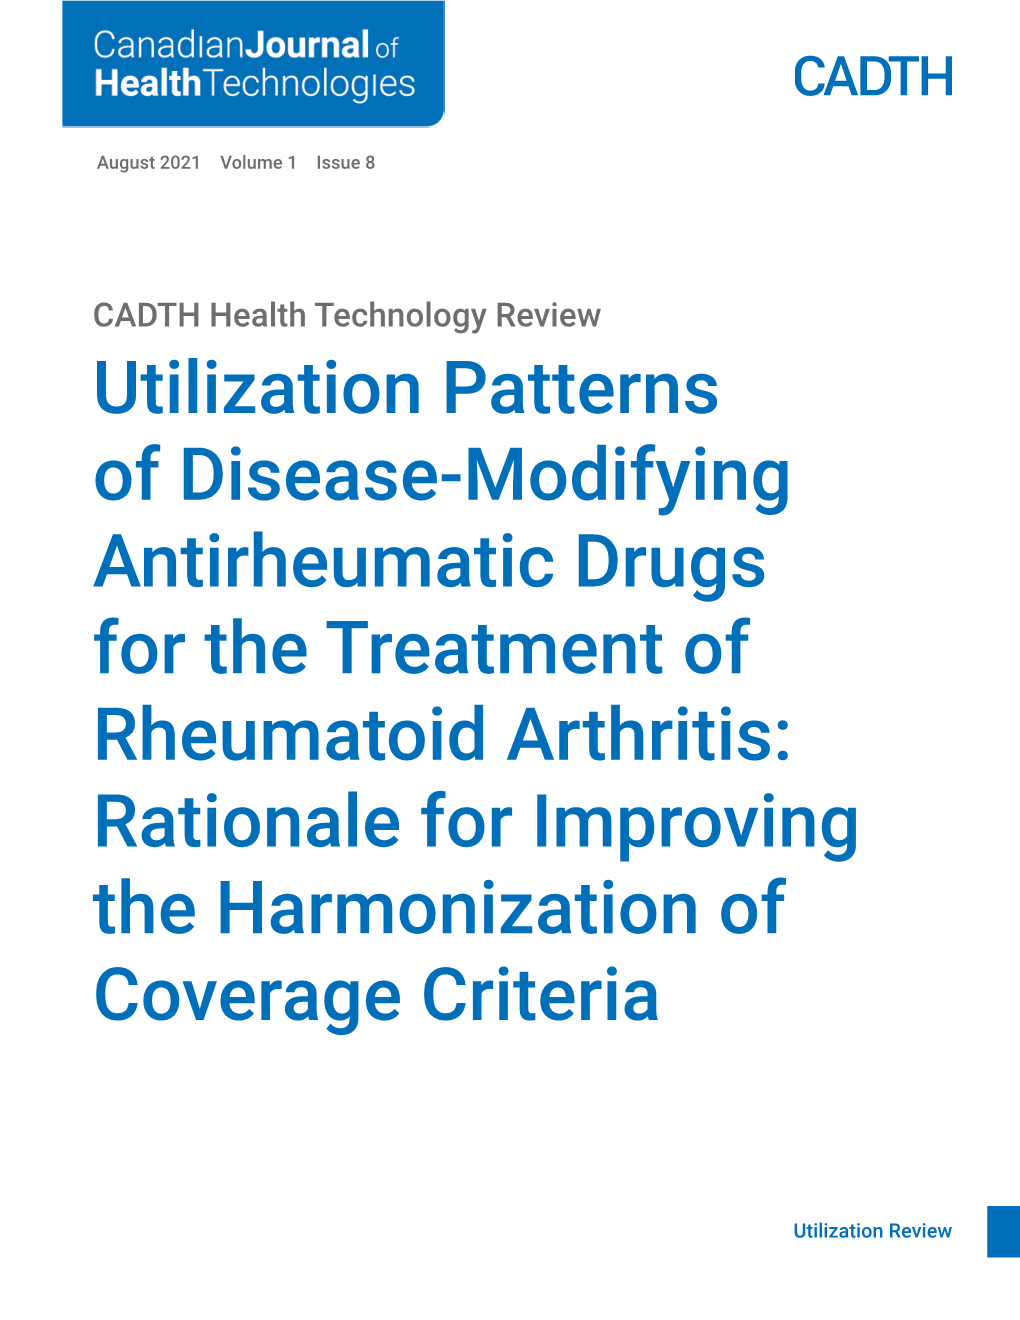 Utilization Patterns of Disease-Modifying Antirheumatic